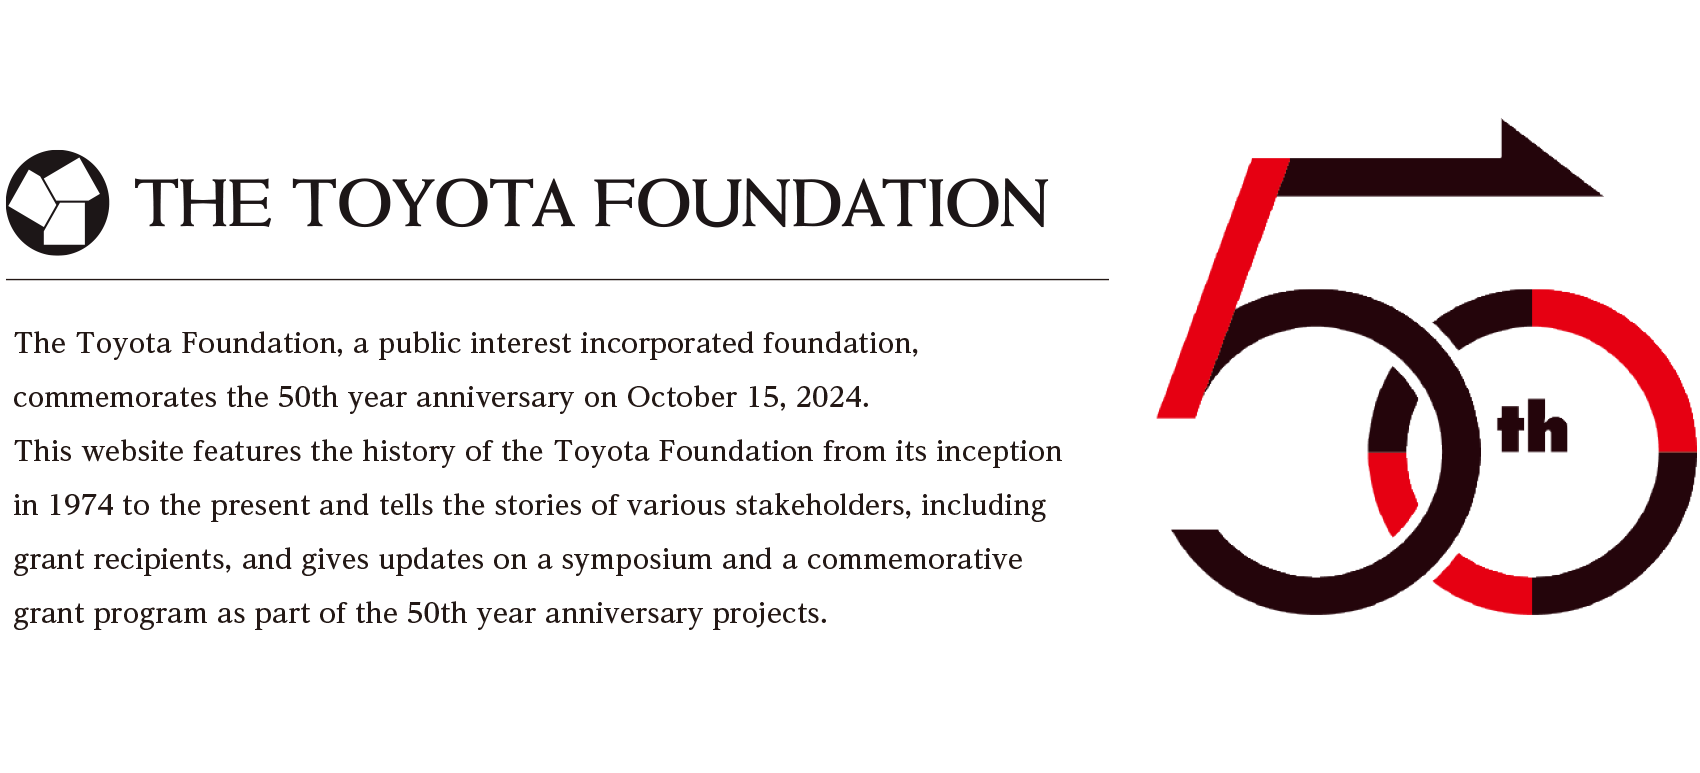 The Toyota Foundation